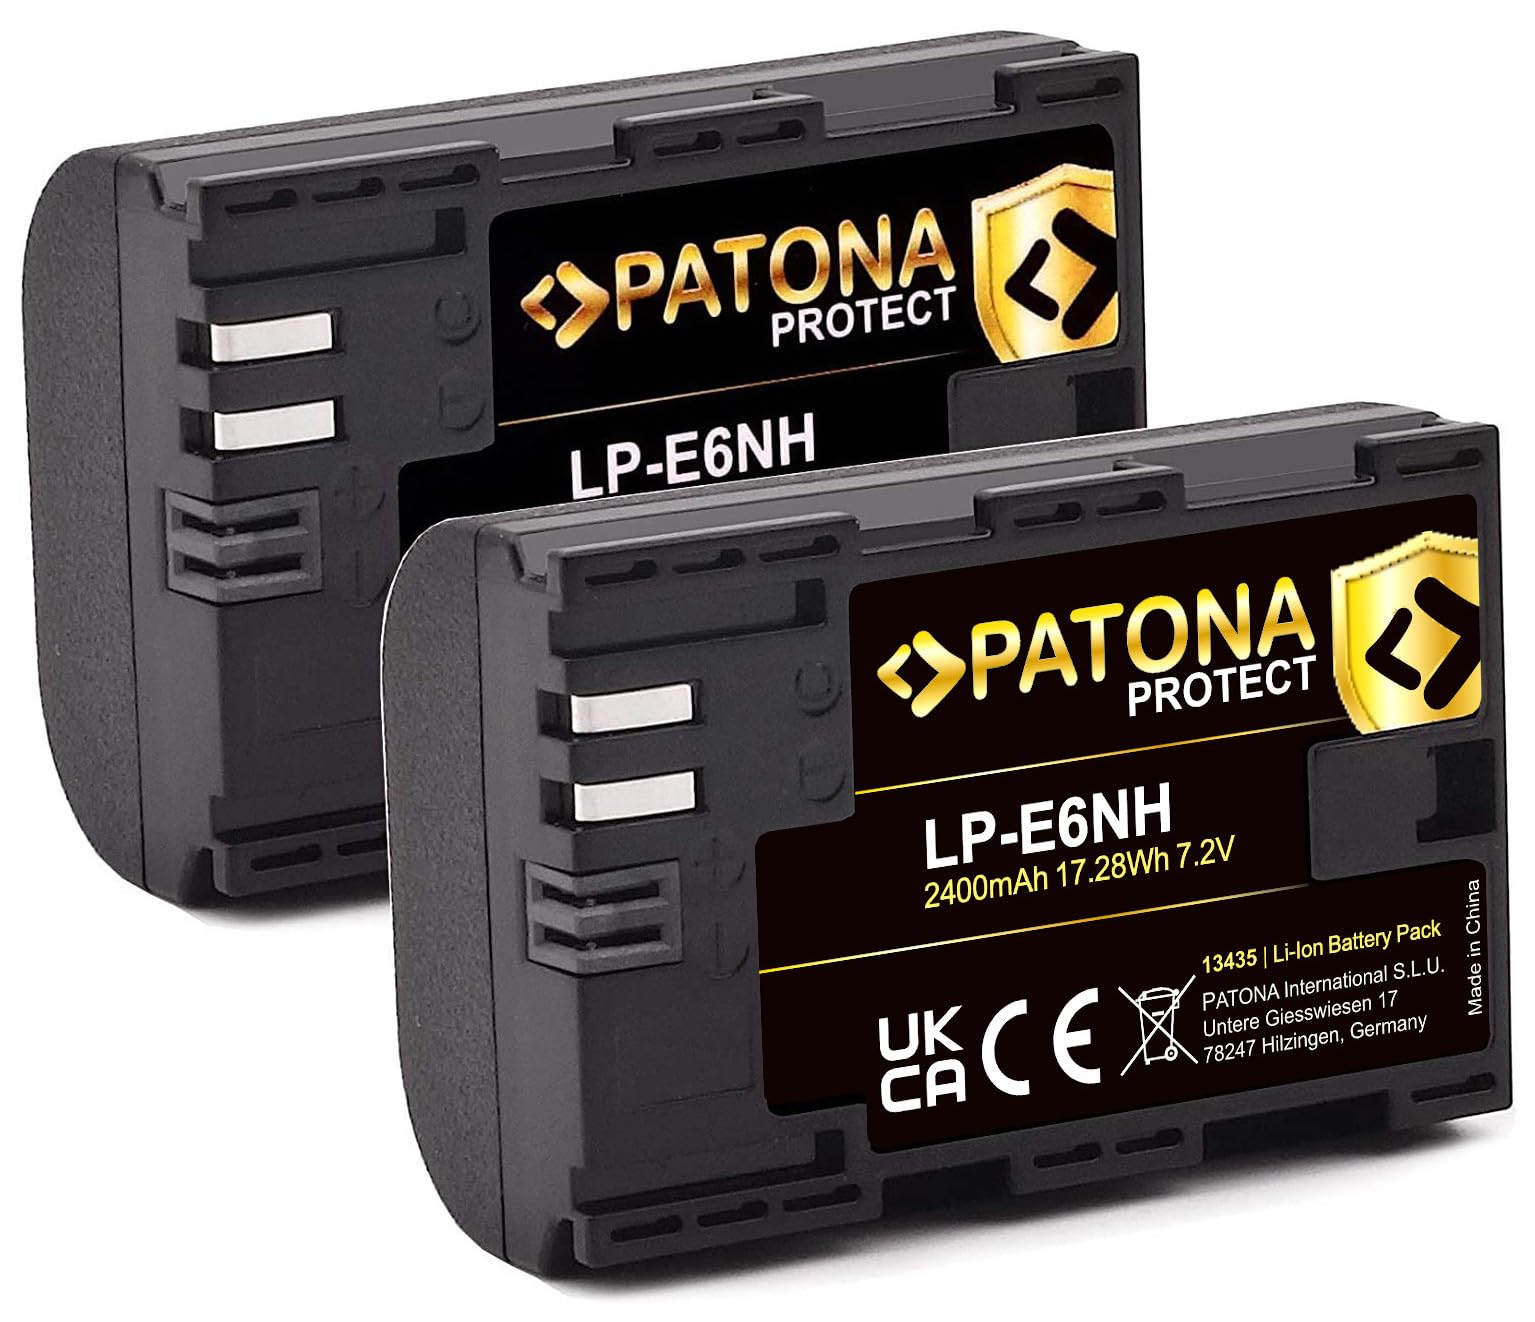 PATONA Protect V1 (2X) LP-E6NH Akku (2400mAh) Qualitätsakku mit NTC-Sensor und V1 Gehäuse - Intelligentes Akkusystem - neueste Generation